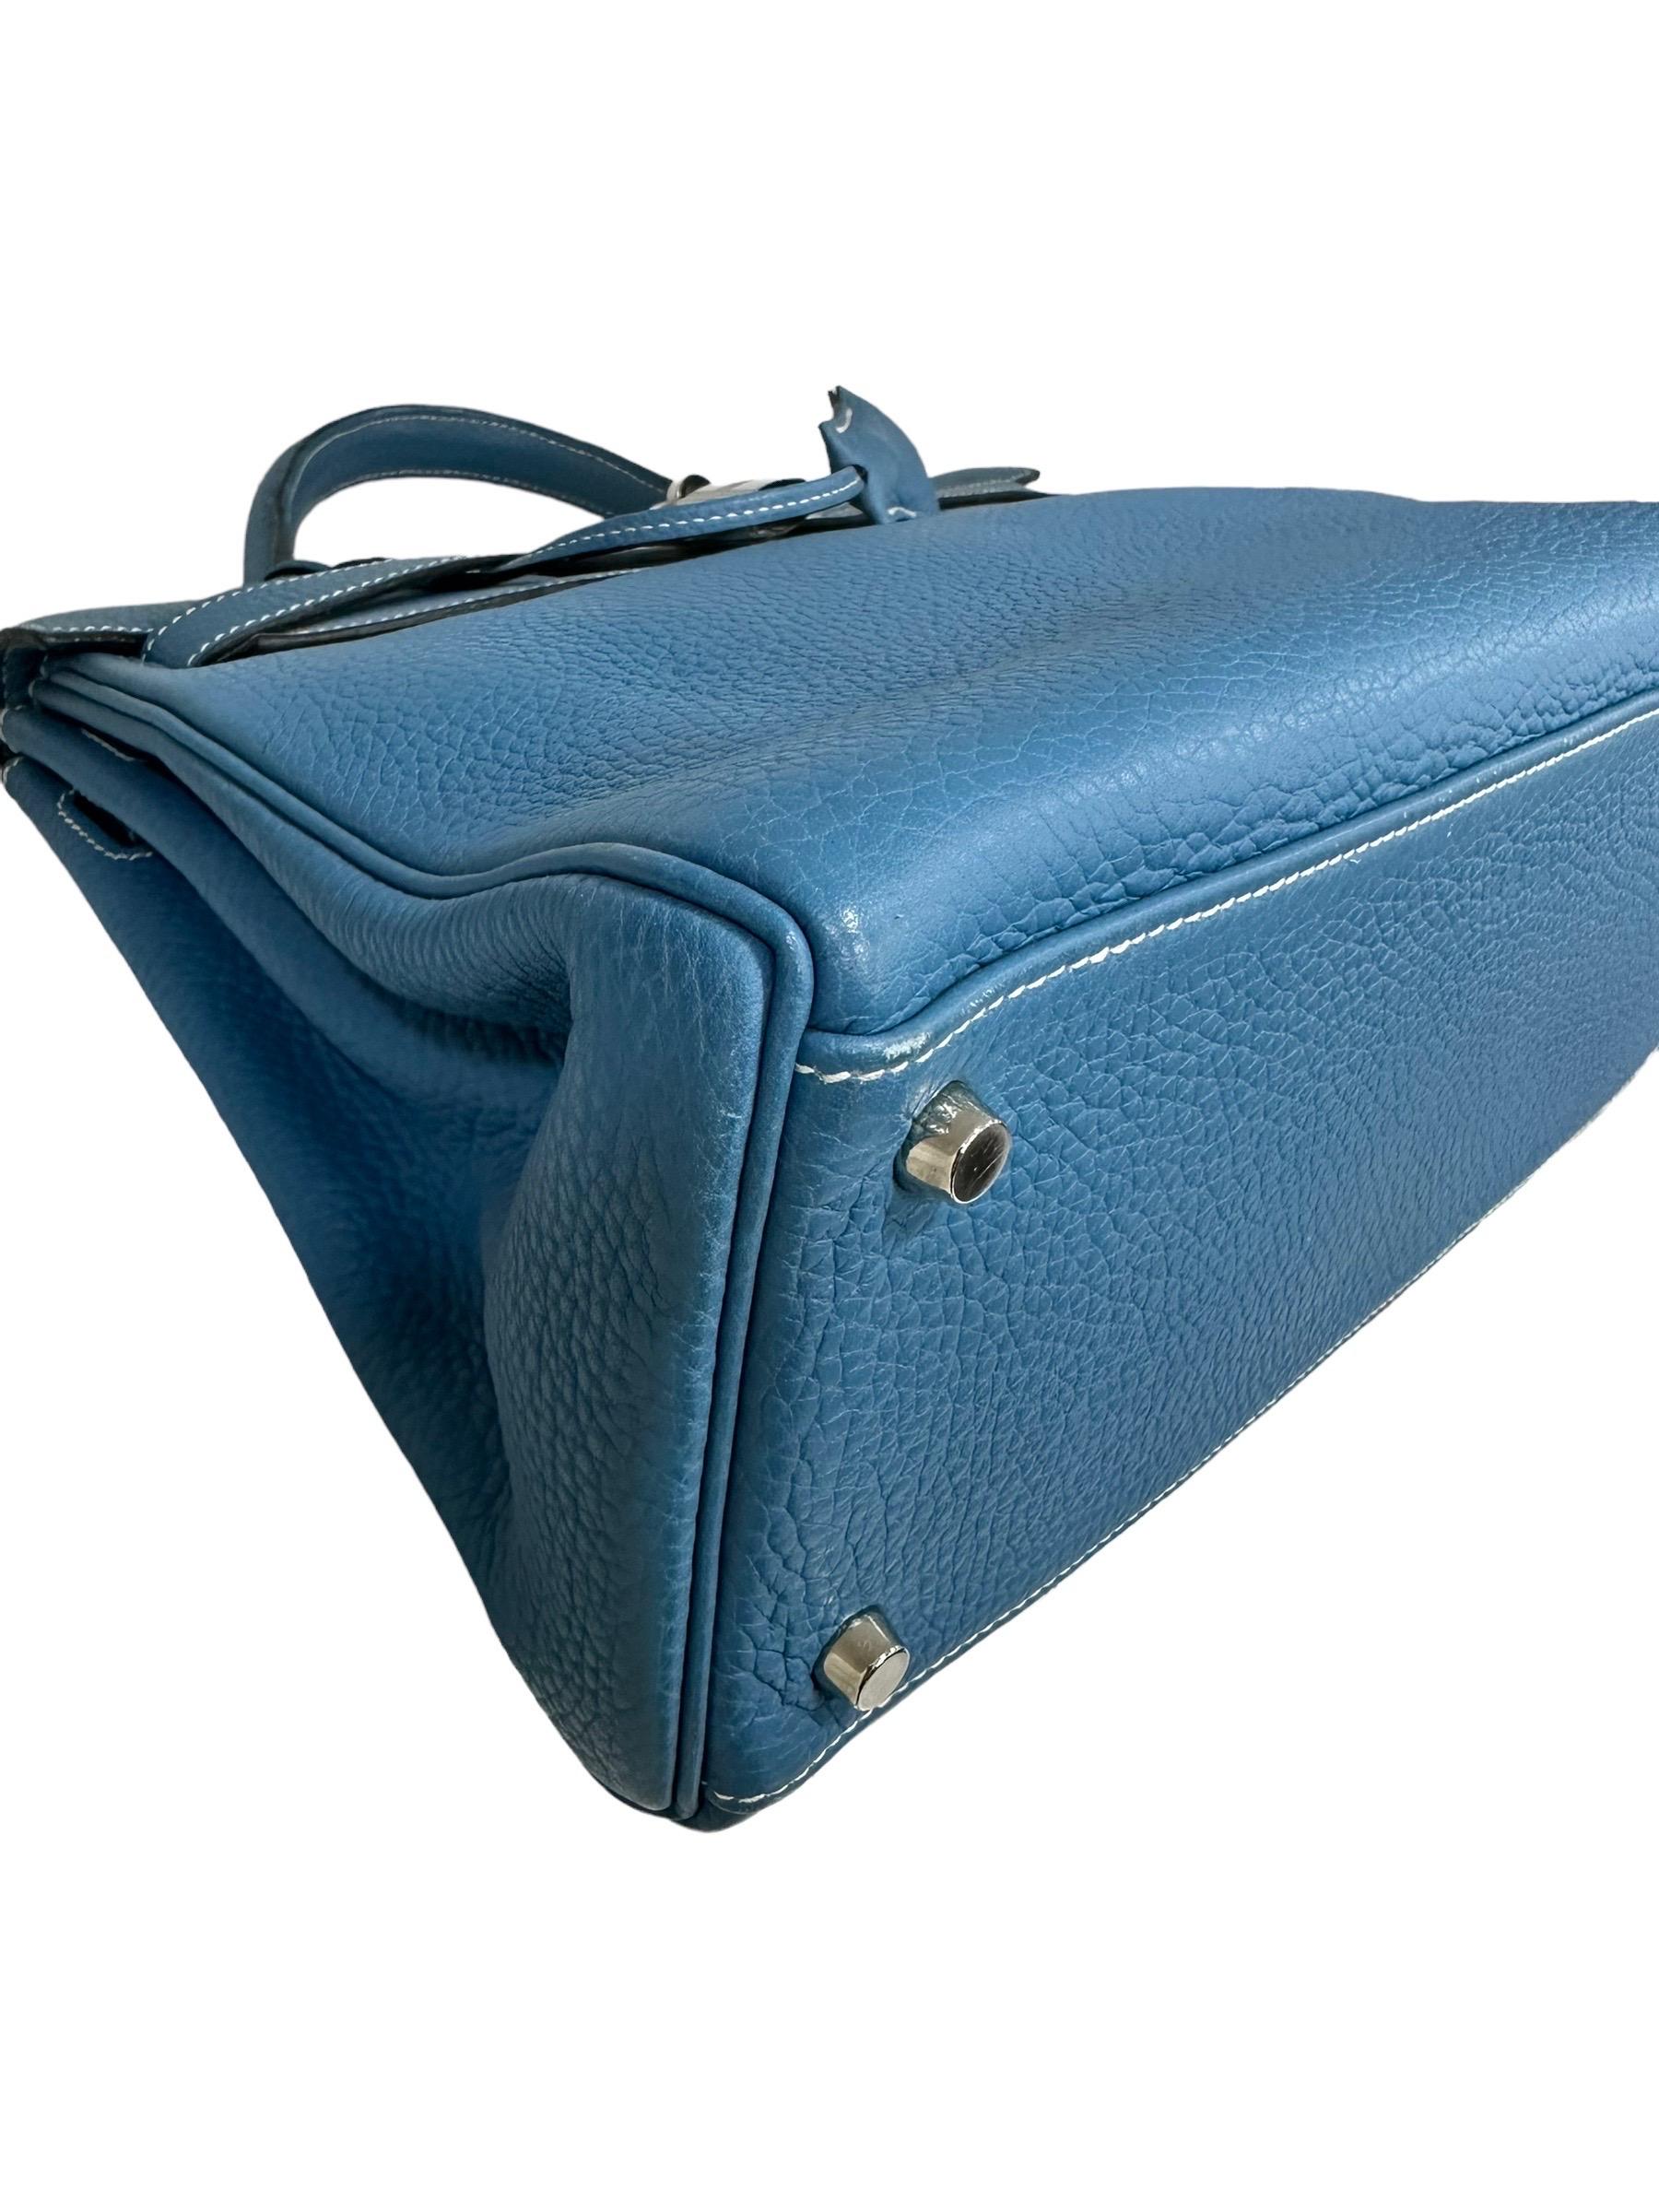 Hermès Kelly Bag 32 Clemence Leather Blue Izmir Top Handle Bag For Sale 8